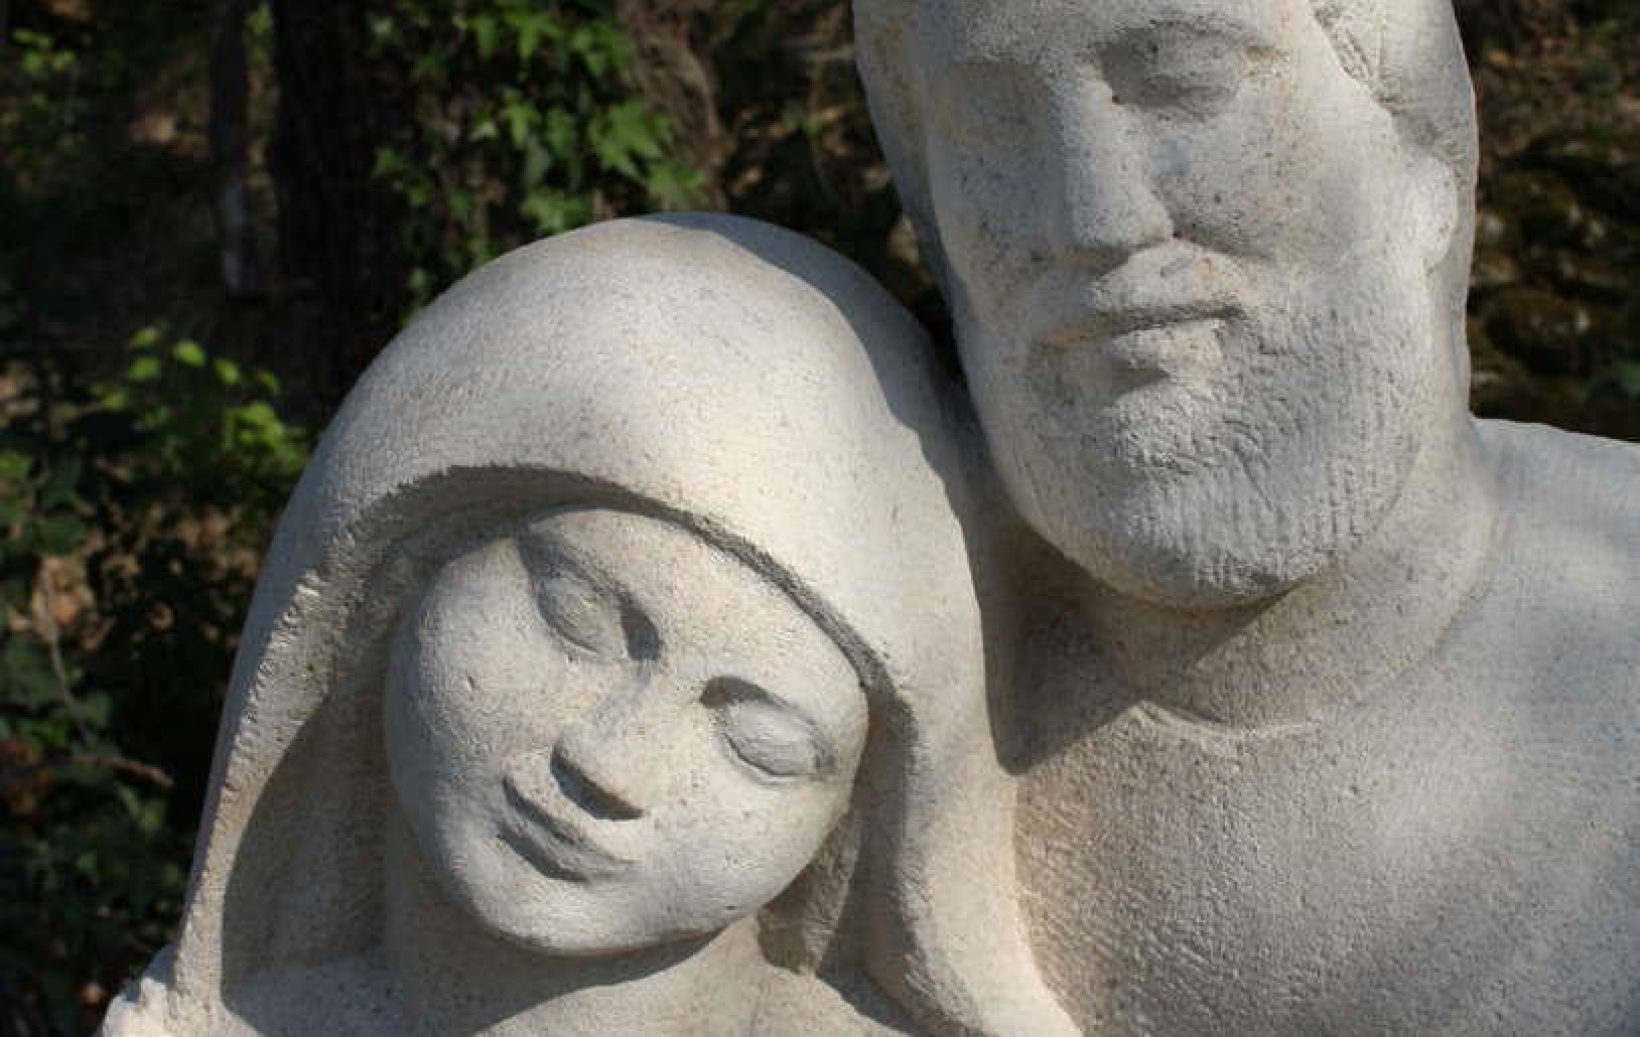 sculpture statue sainte famille pierre sculptee naturelle martin damay